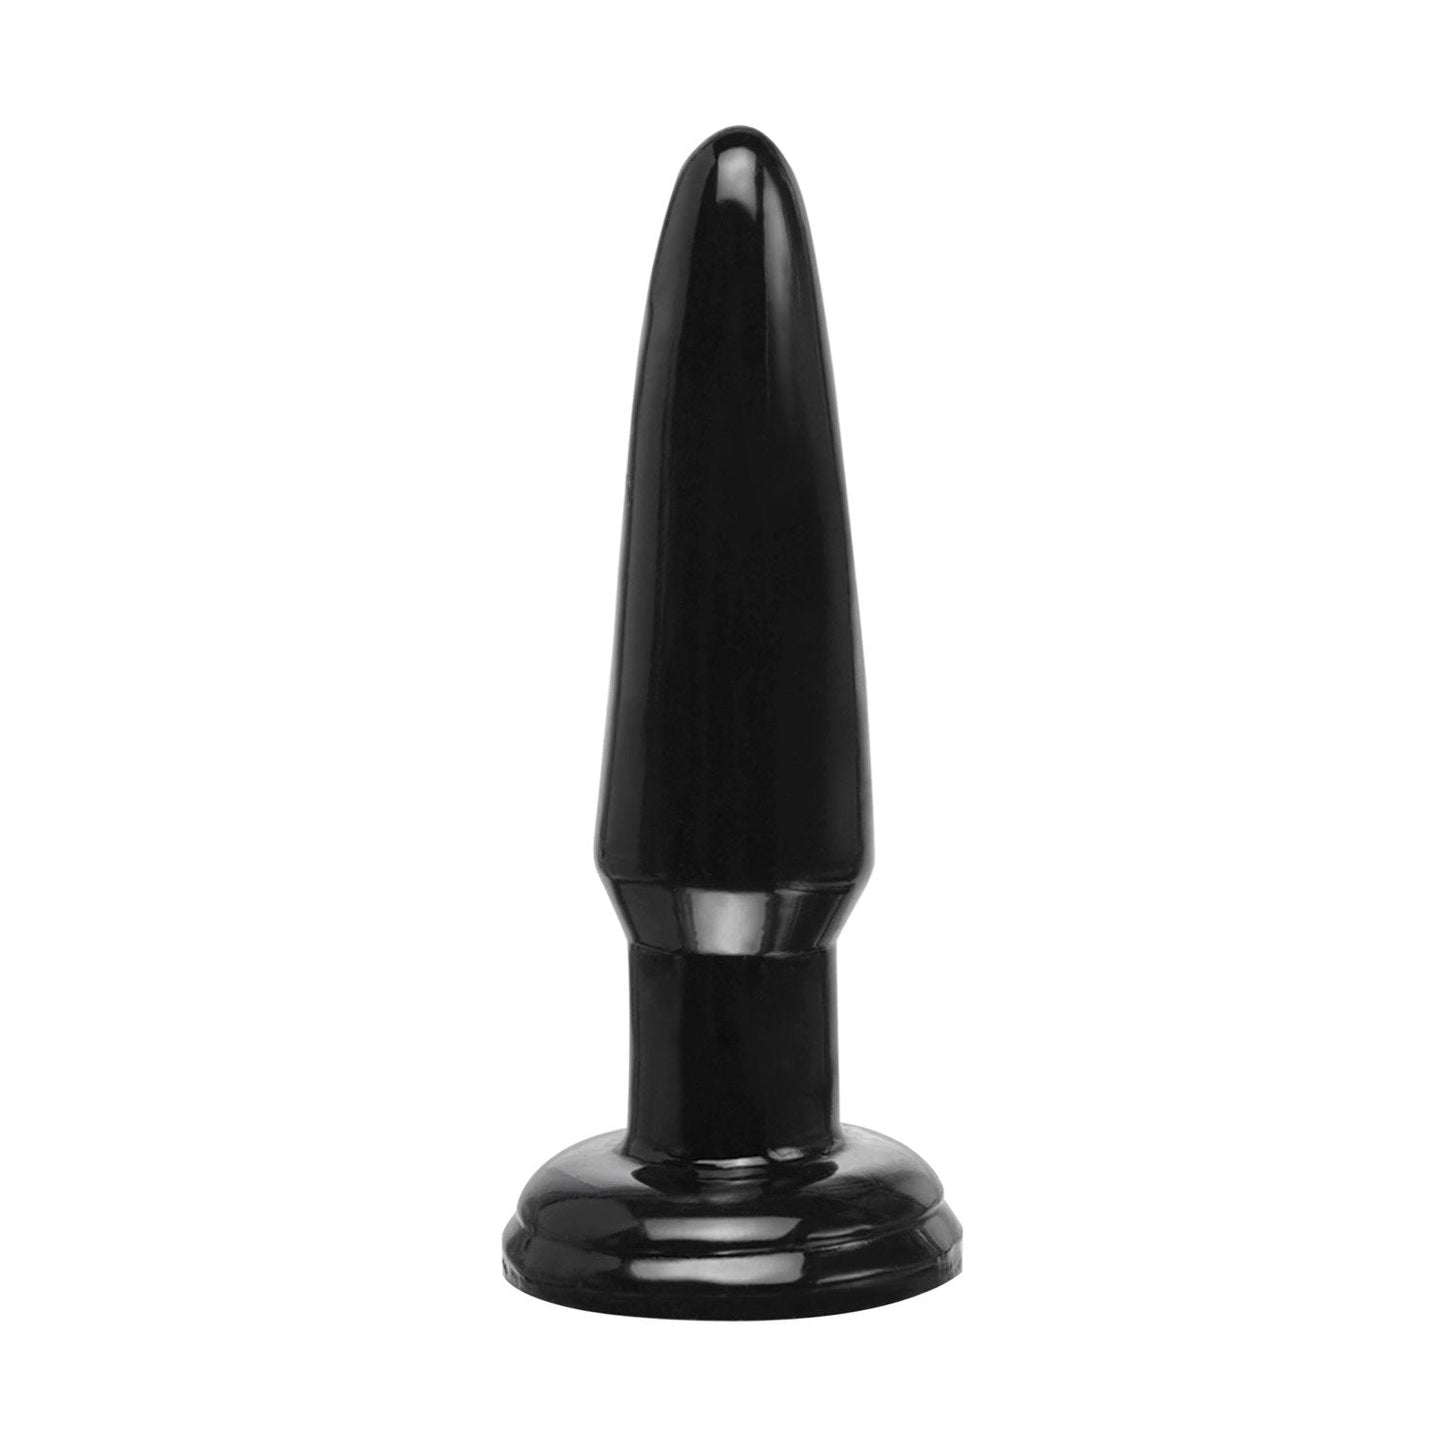 Limited Edition Beginner's Butt Plug - Black 9.5 cm (3.75") Butt Plug